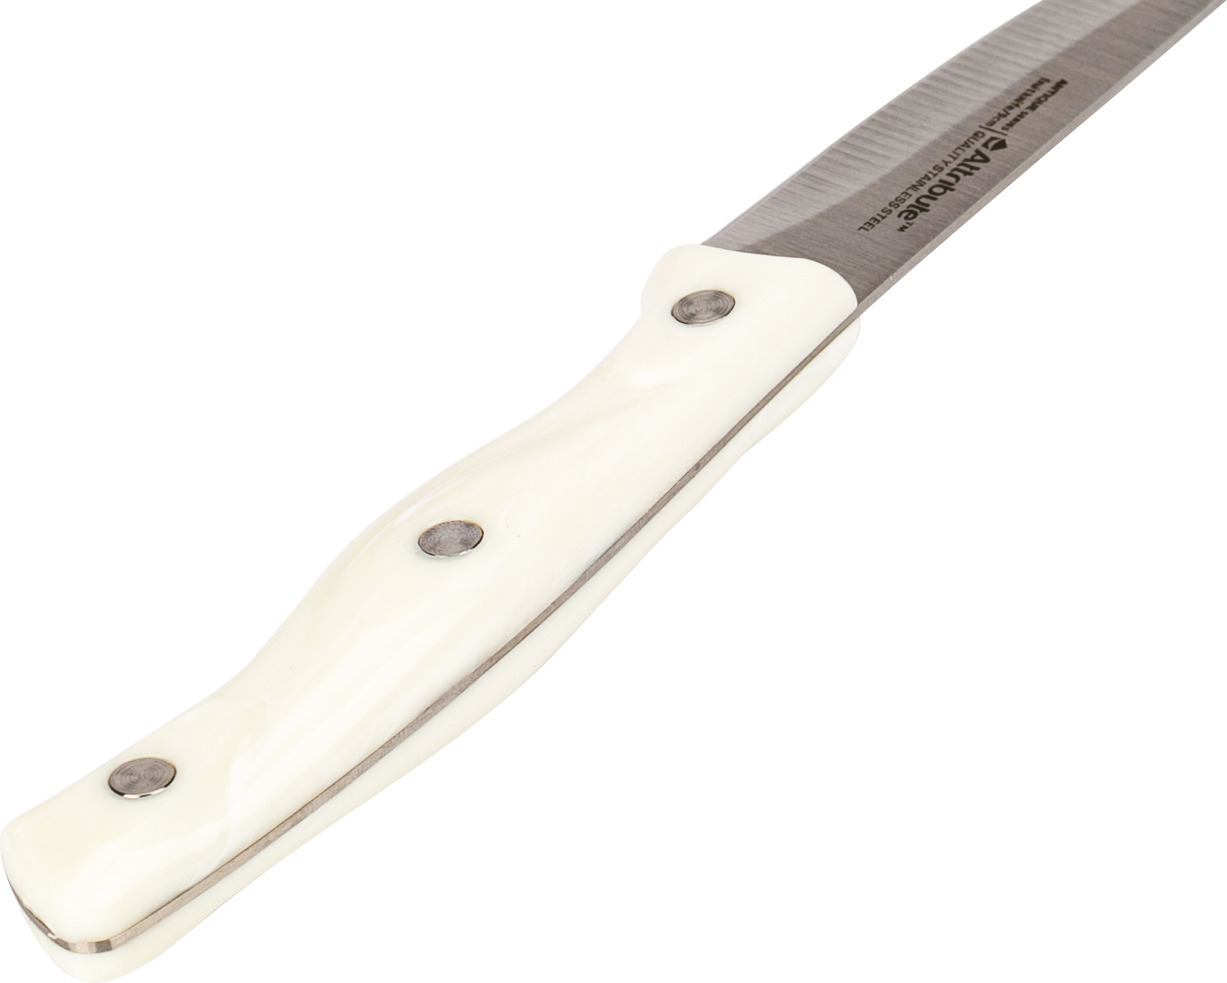 фото Нож для фруктов Attribute Knife "Antique", длина лезвия 9 см